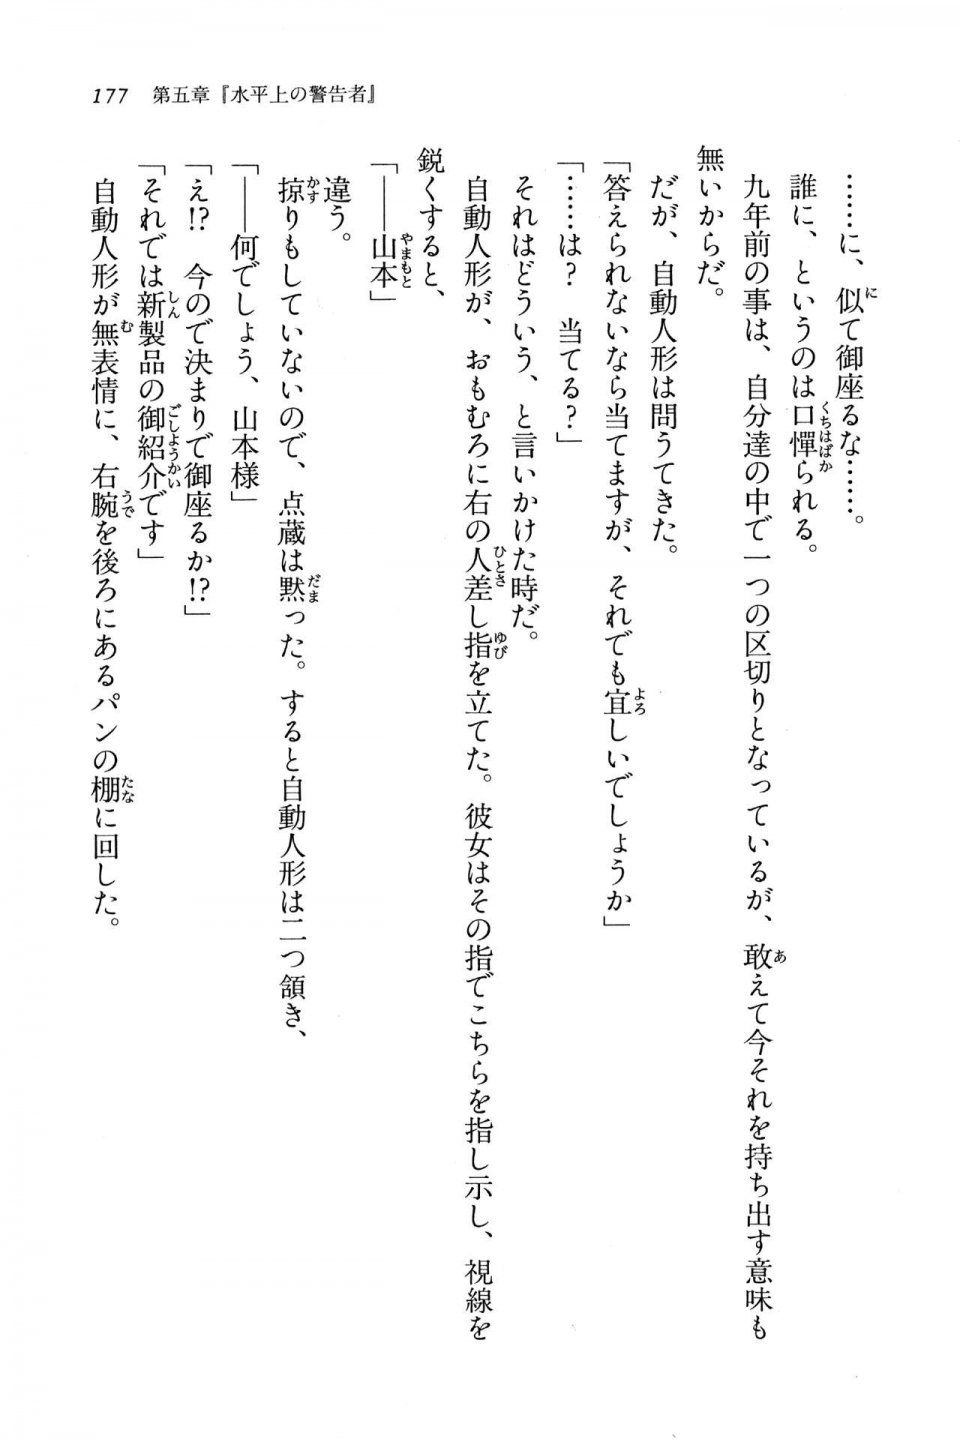 Kyoukai Senjou no Horizon BD Special Mininovel Vol 7(4A) - Photo #181